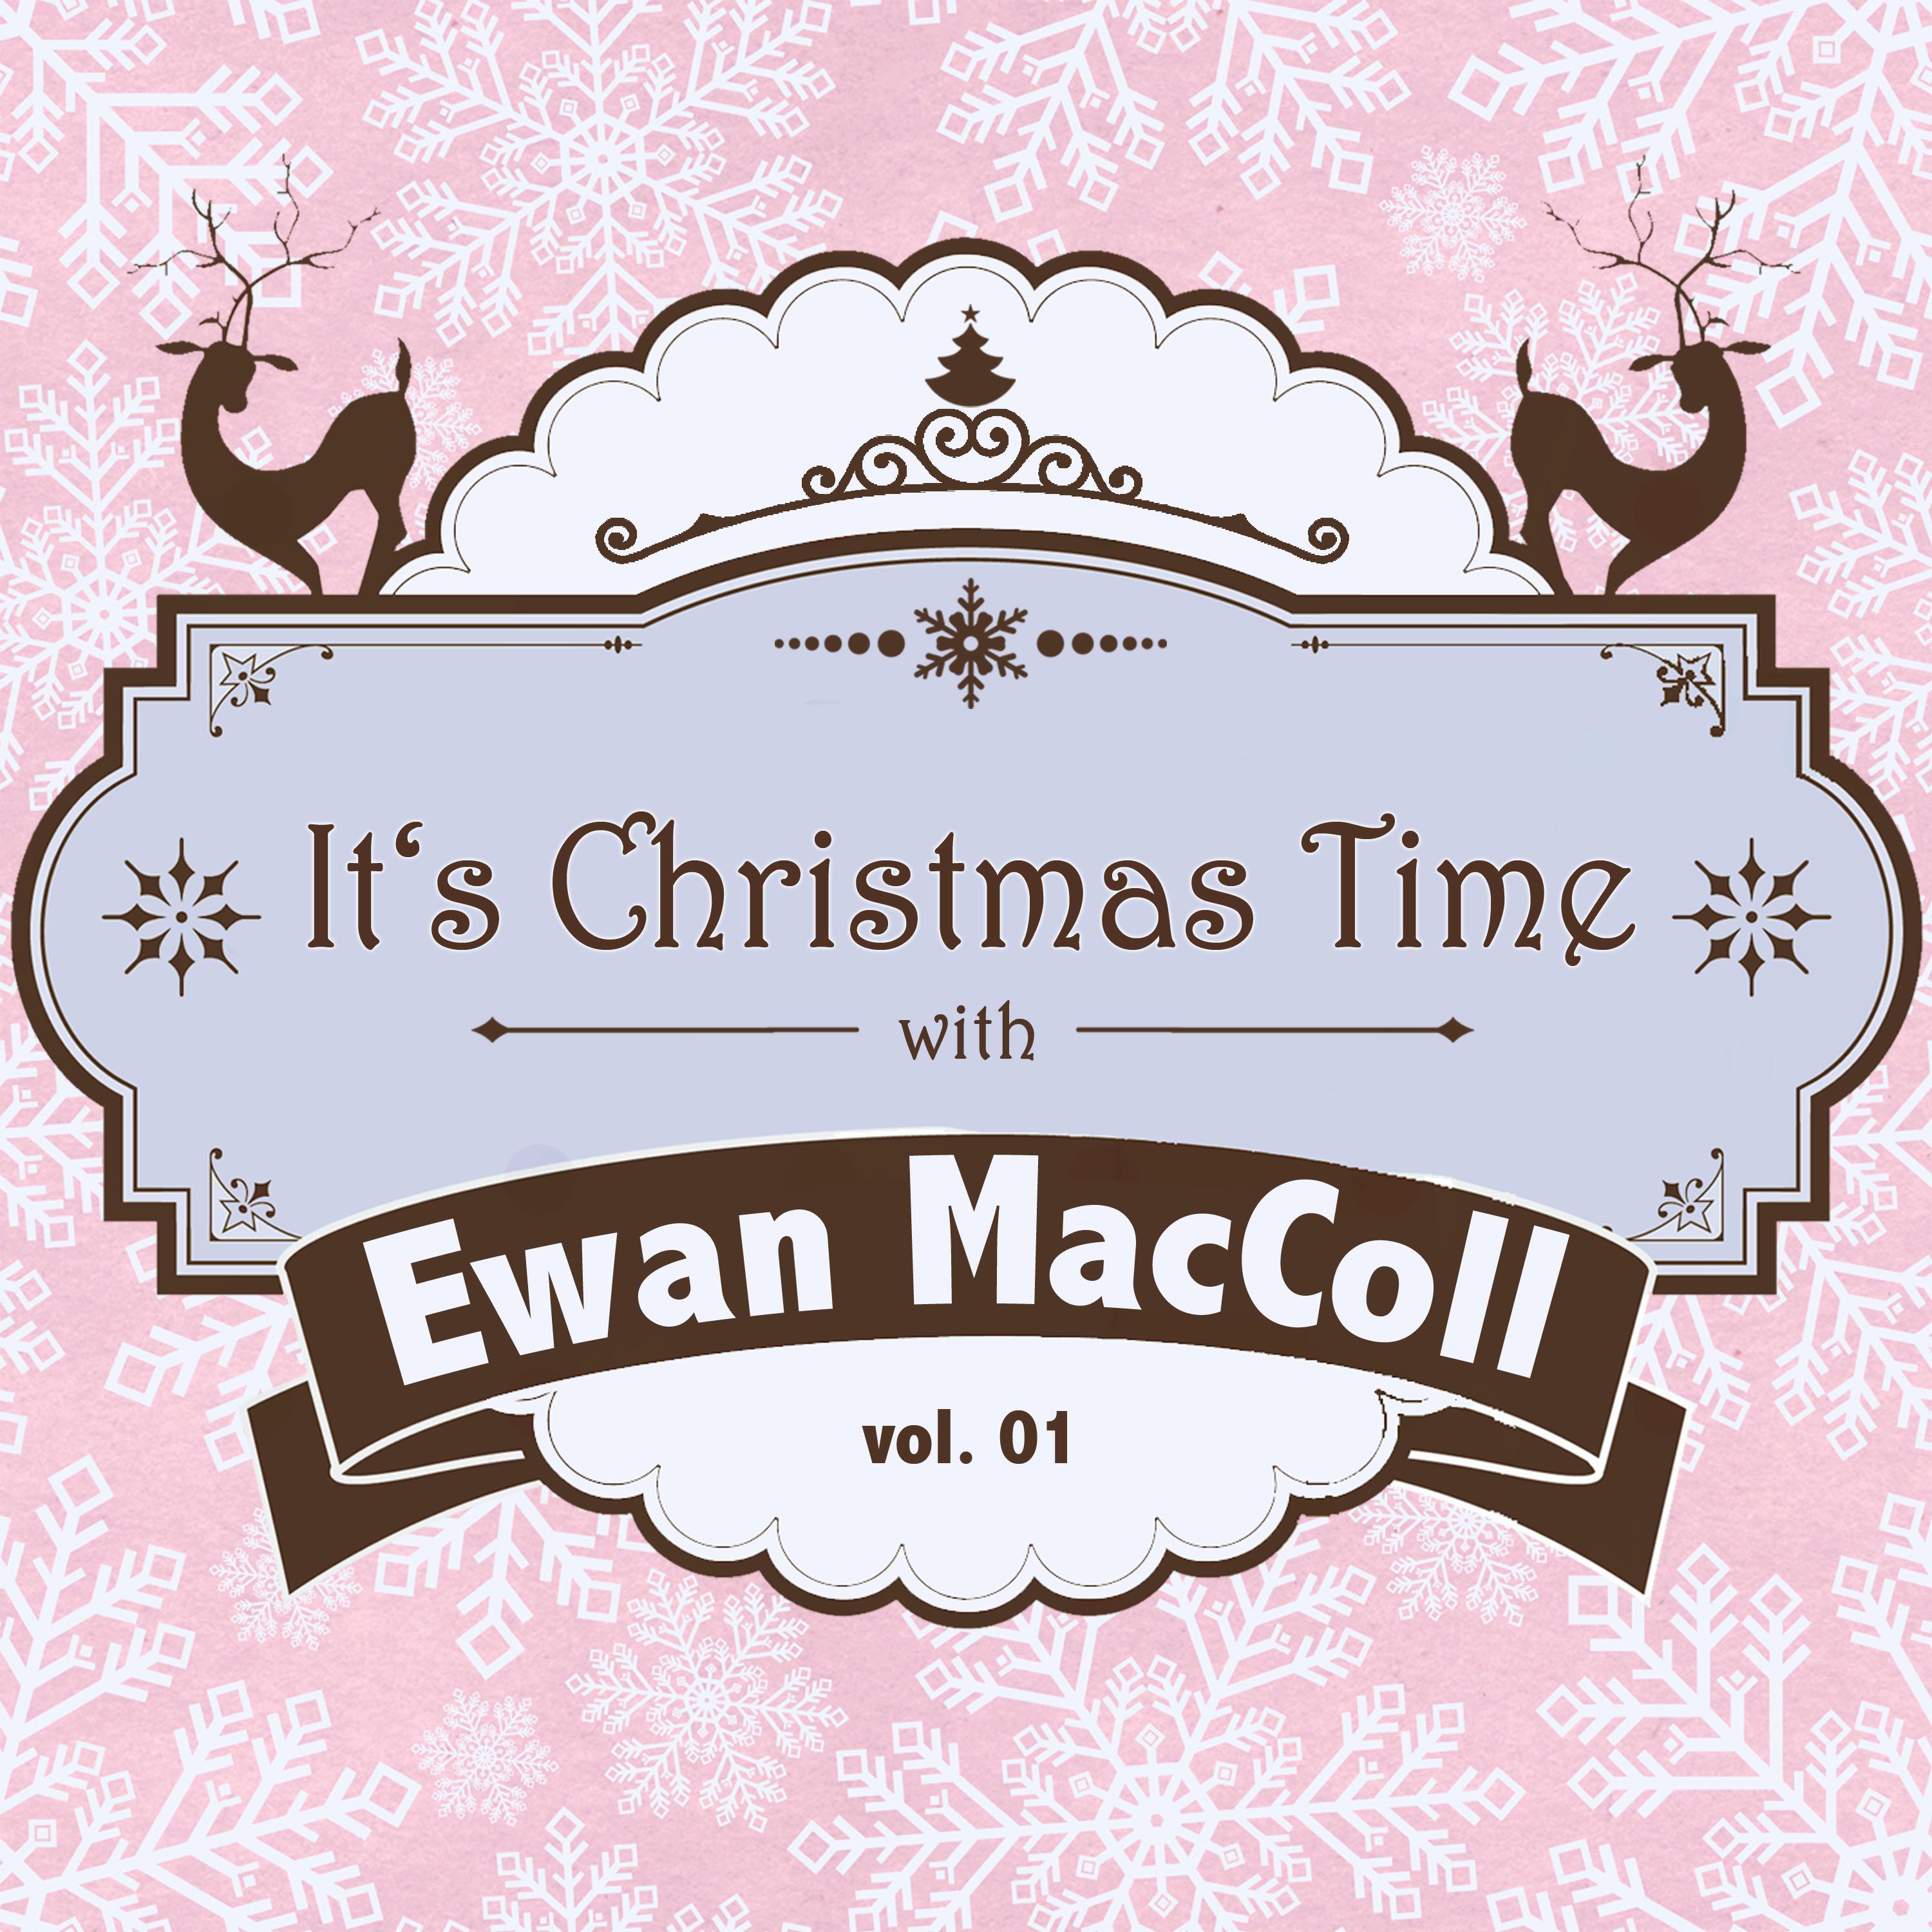 It's Christmas Time with Ewan Maccoll, Vol. 01